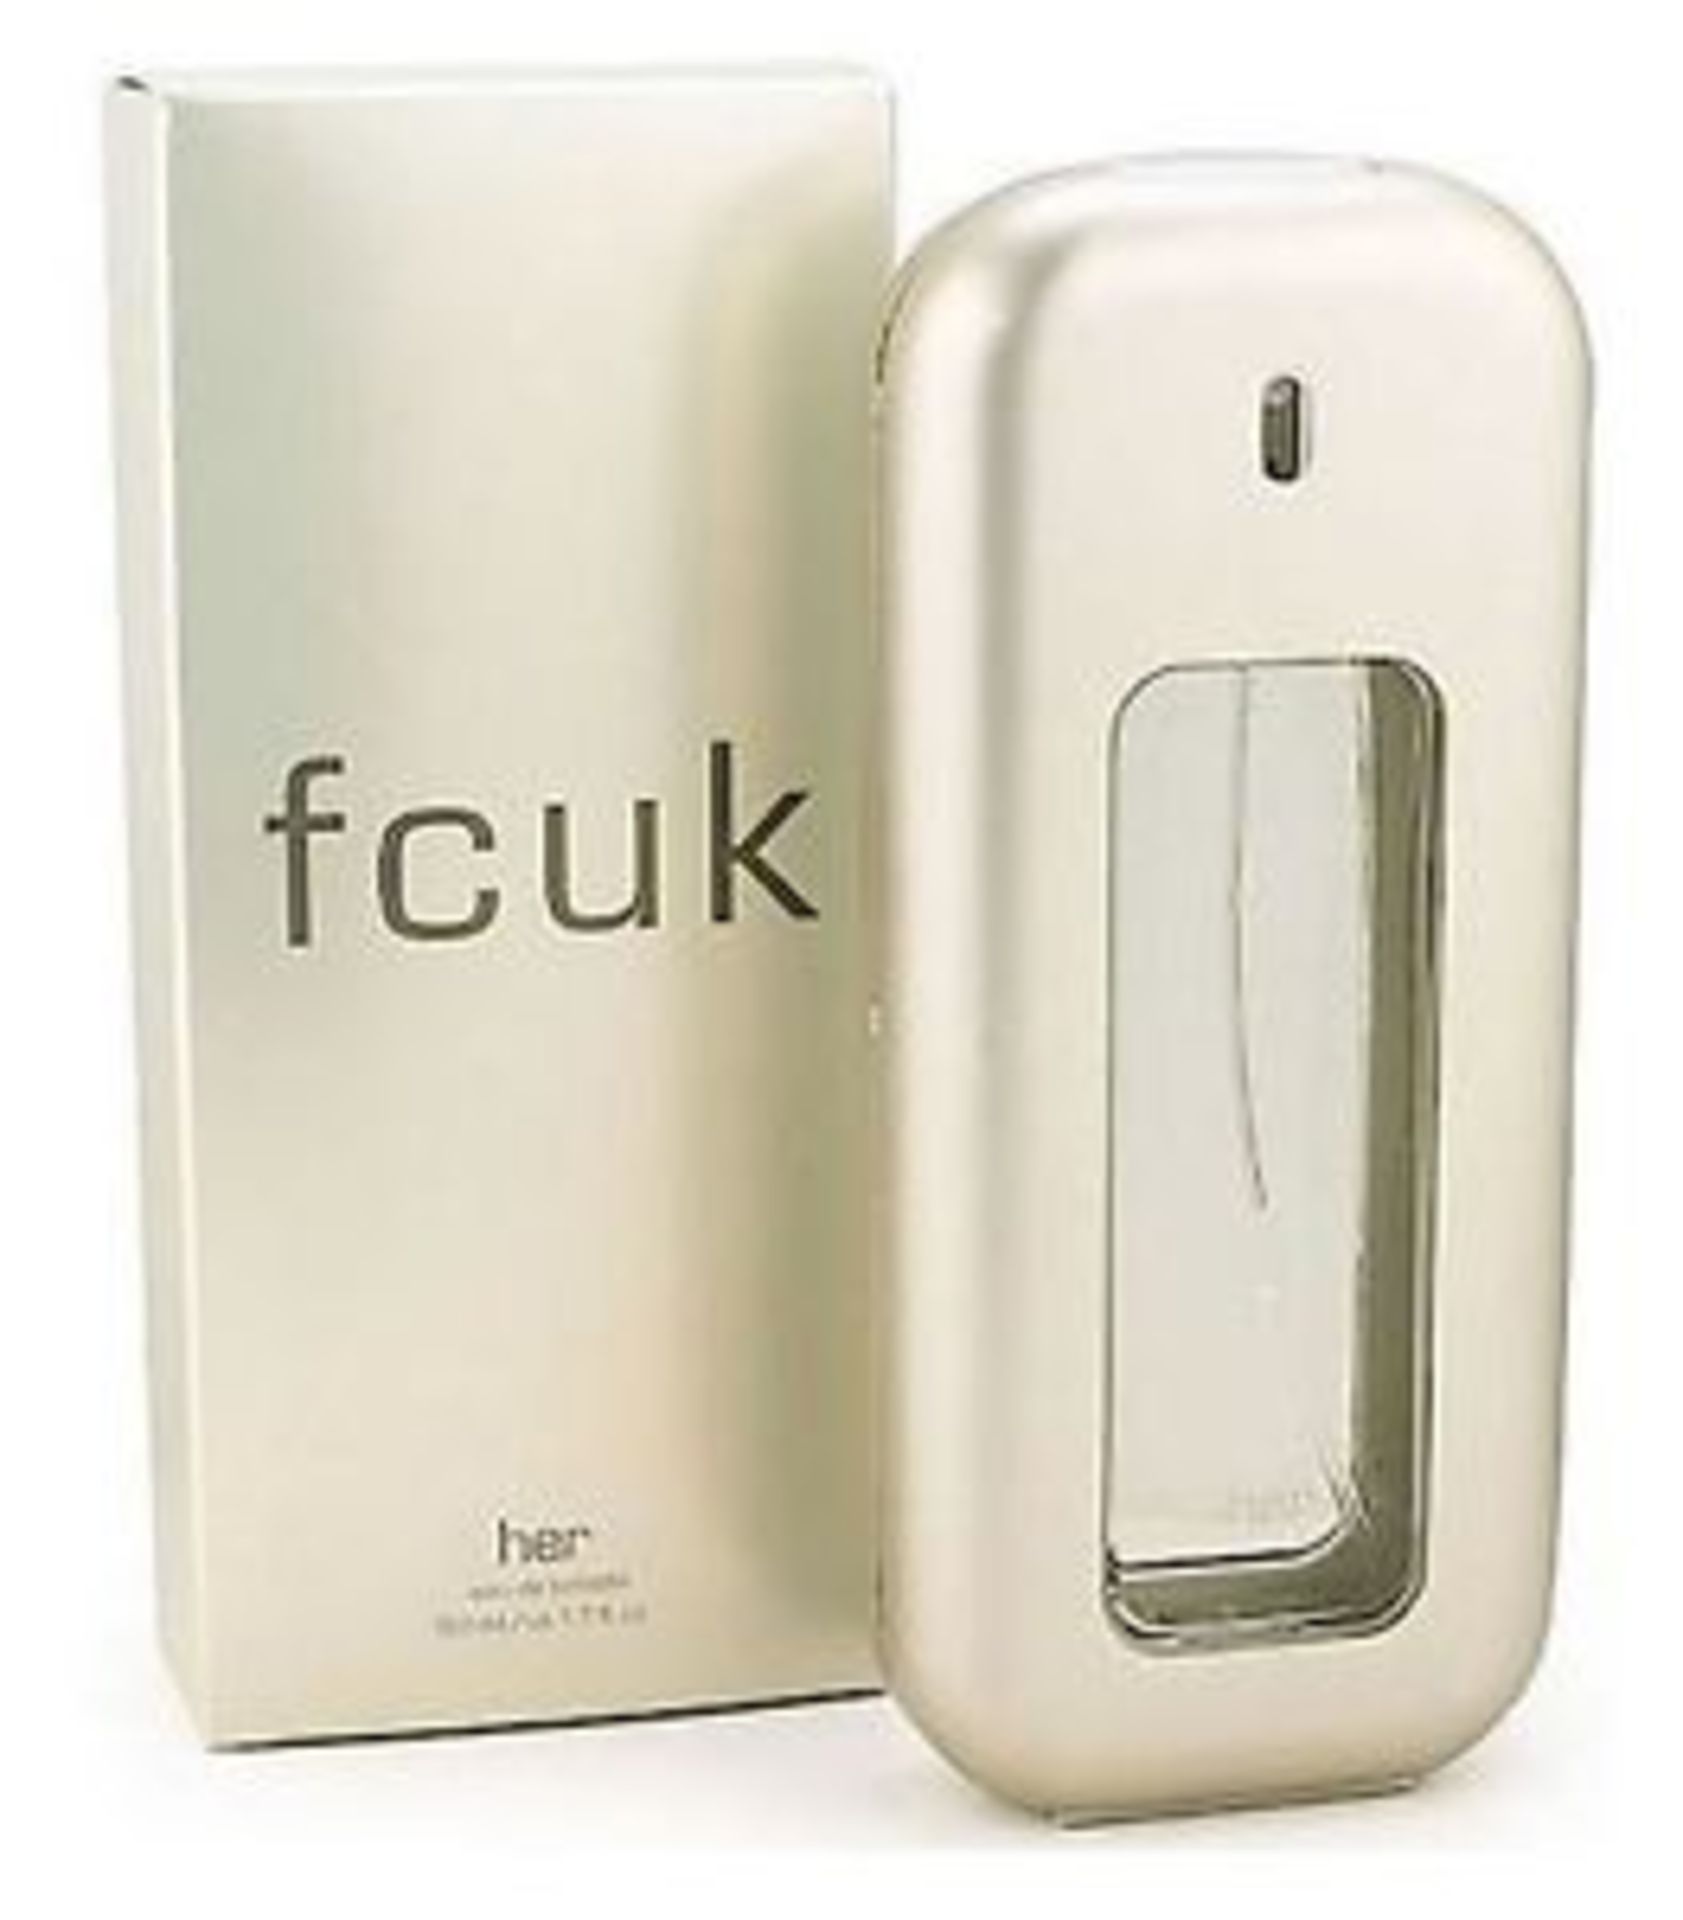 V Brand New FCUK 100ml Her Eau De Toilette The Perfume Shop RRP - £33.00 X 2 Bid price to be